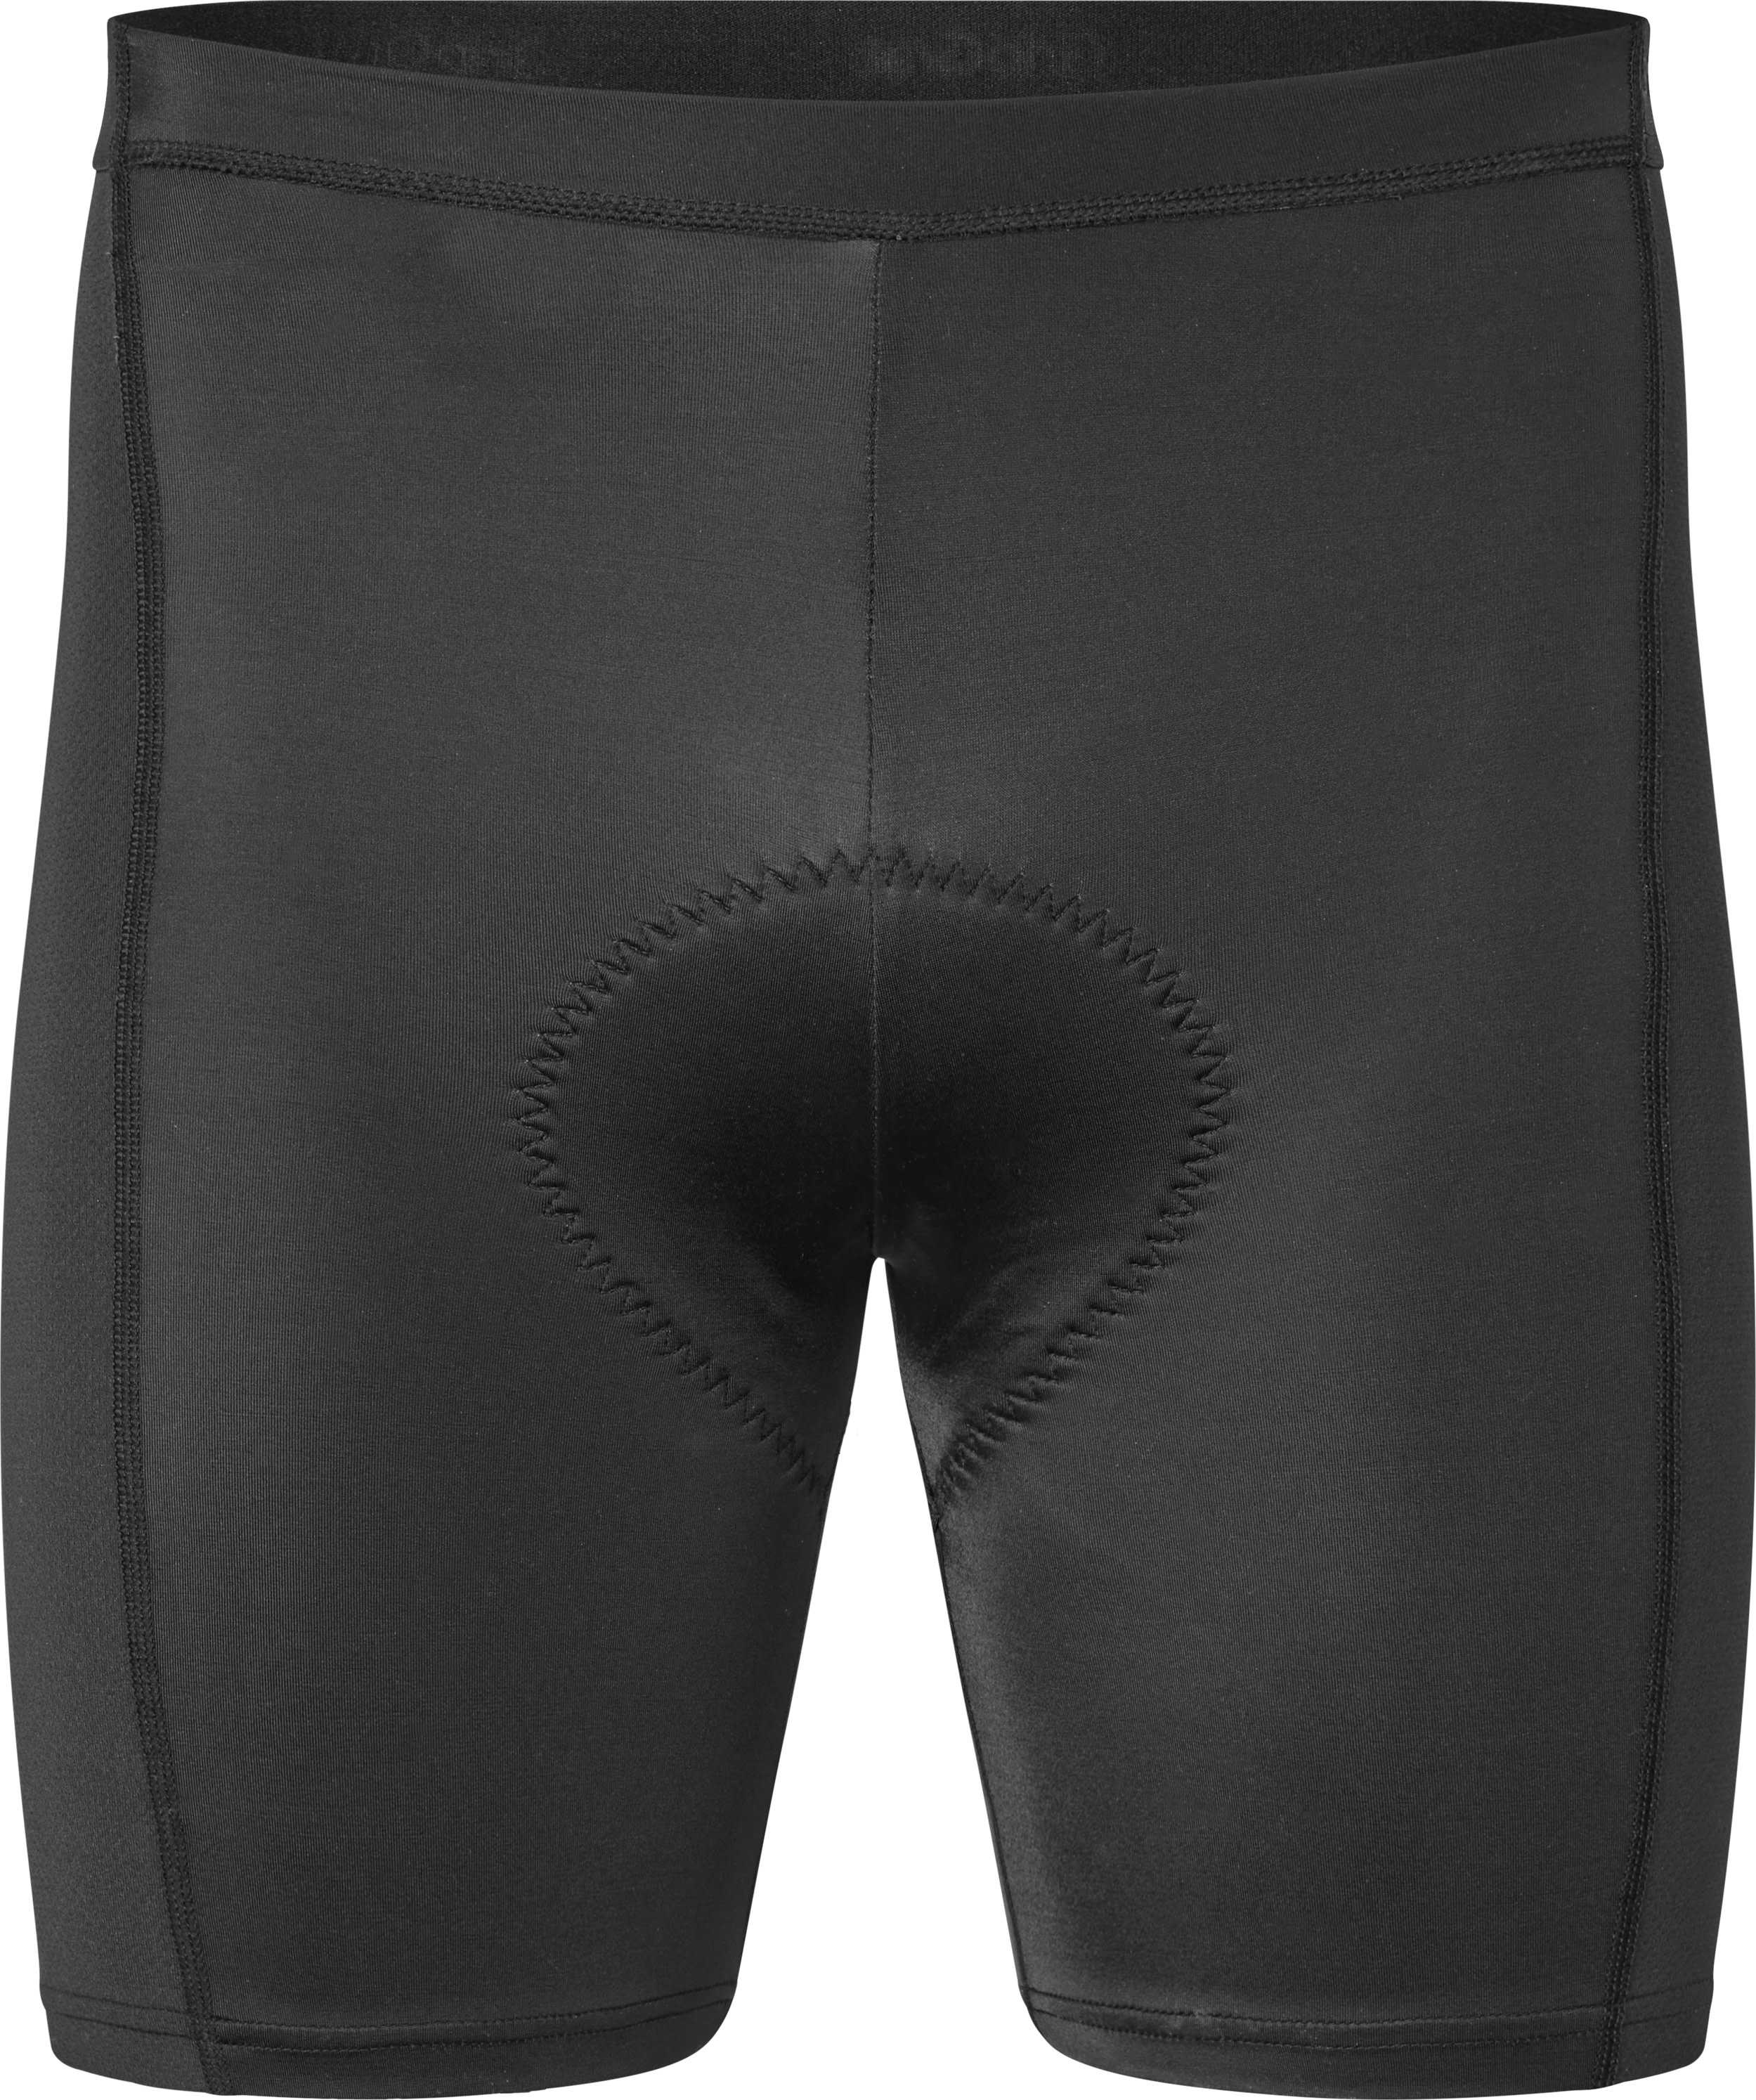 GripGrab Men’s Padded Underwear Shorts Black